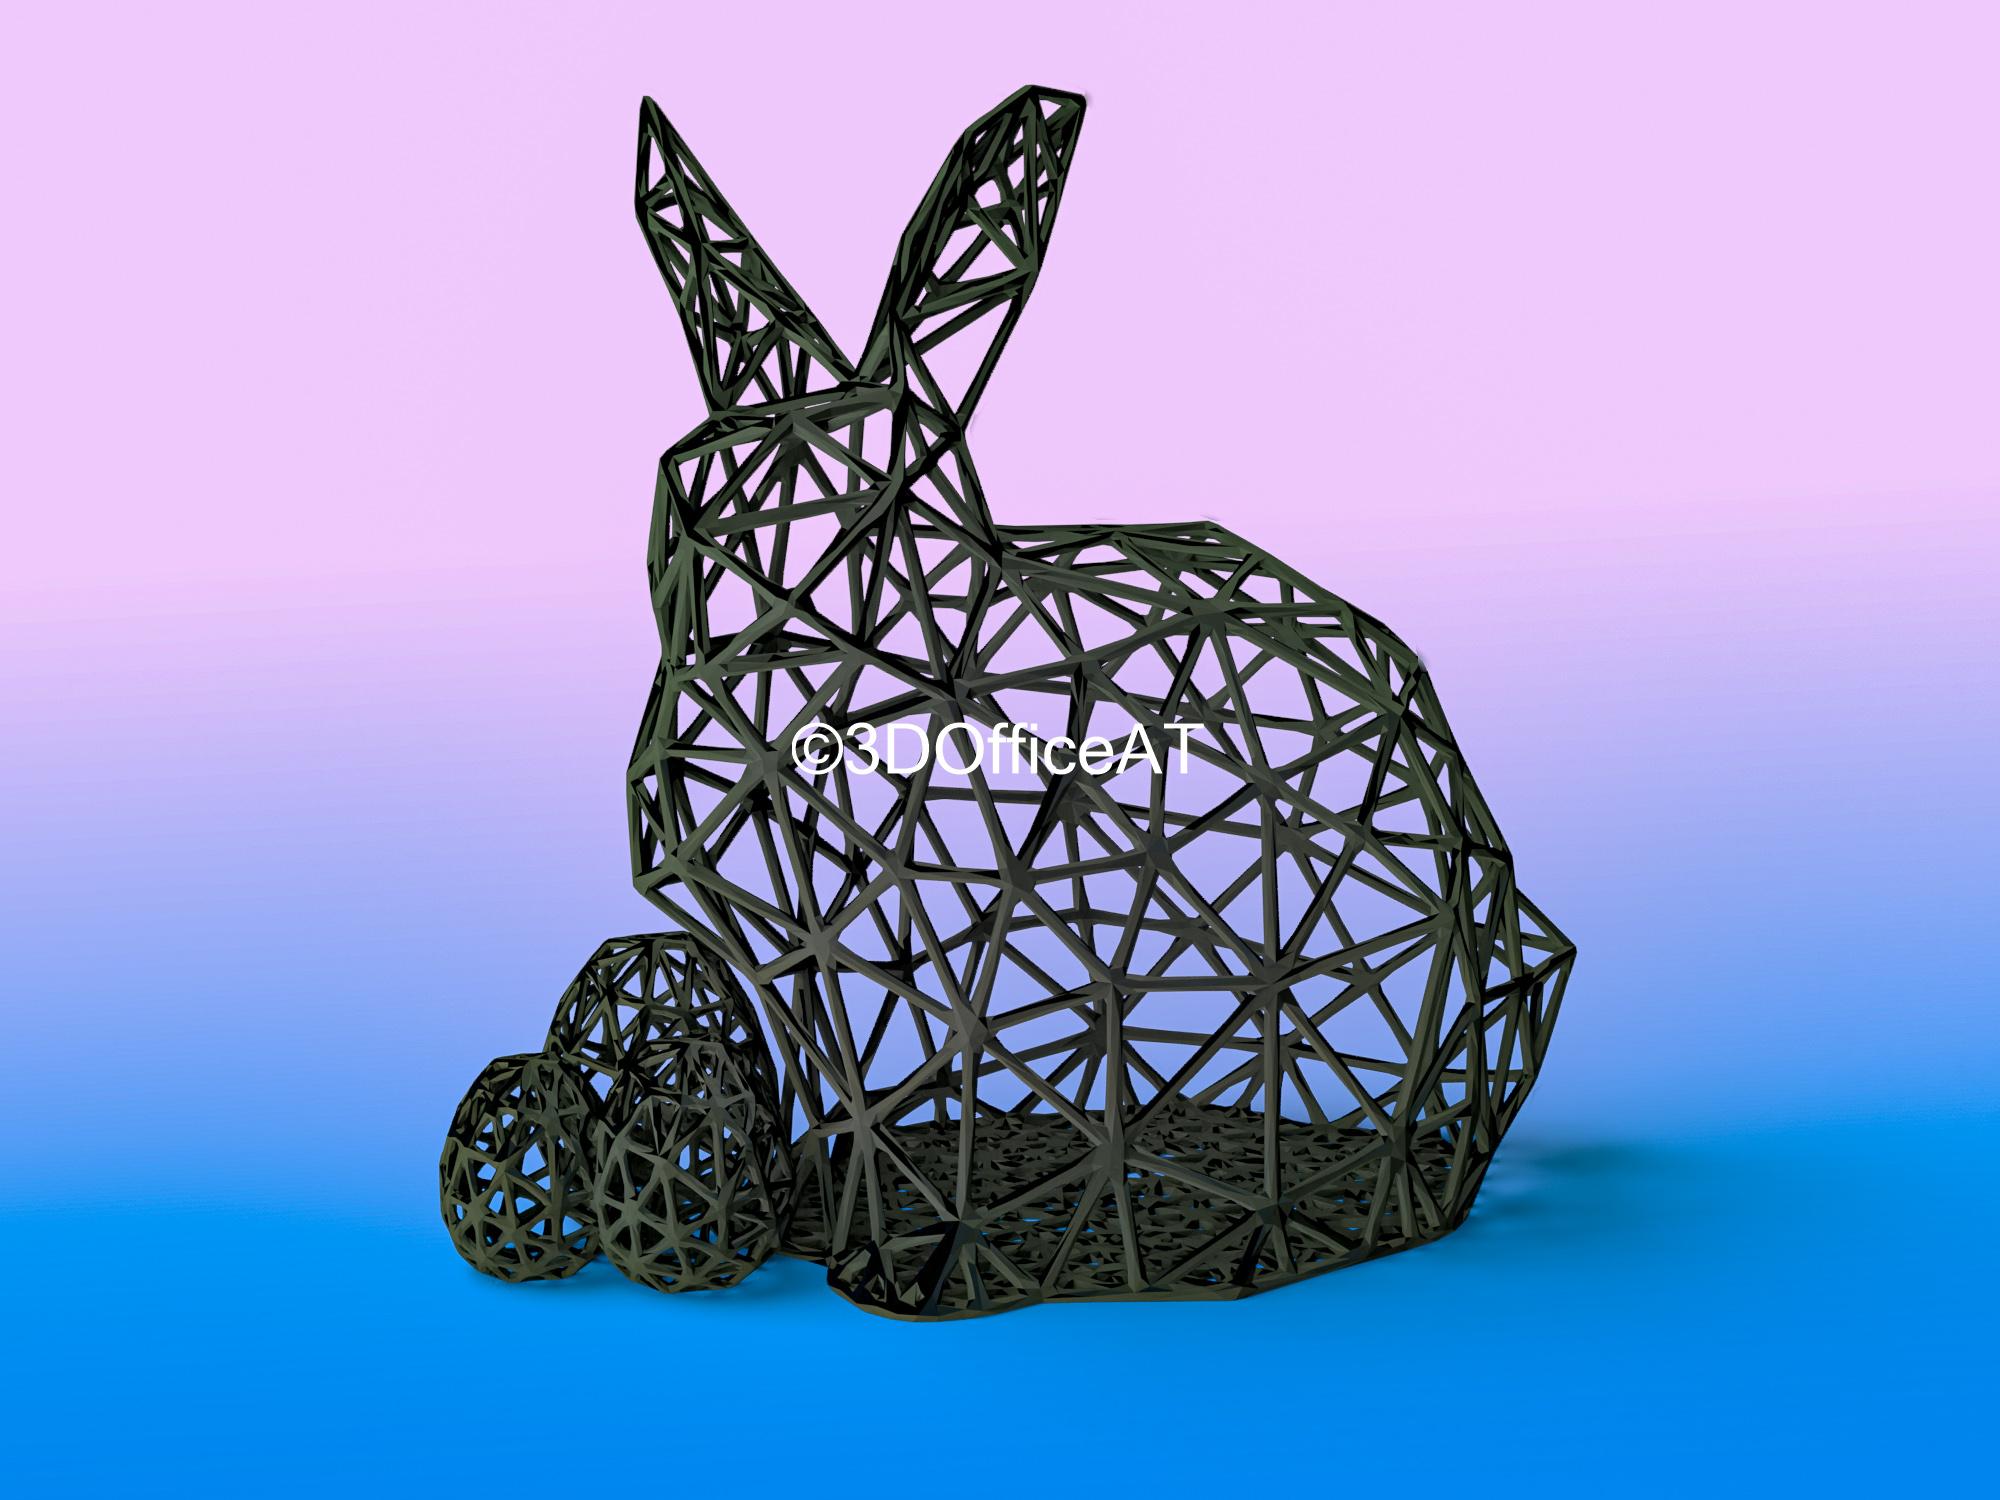 Easter Bunny Wire Art 3DOfficeAT 3d model